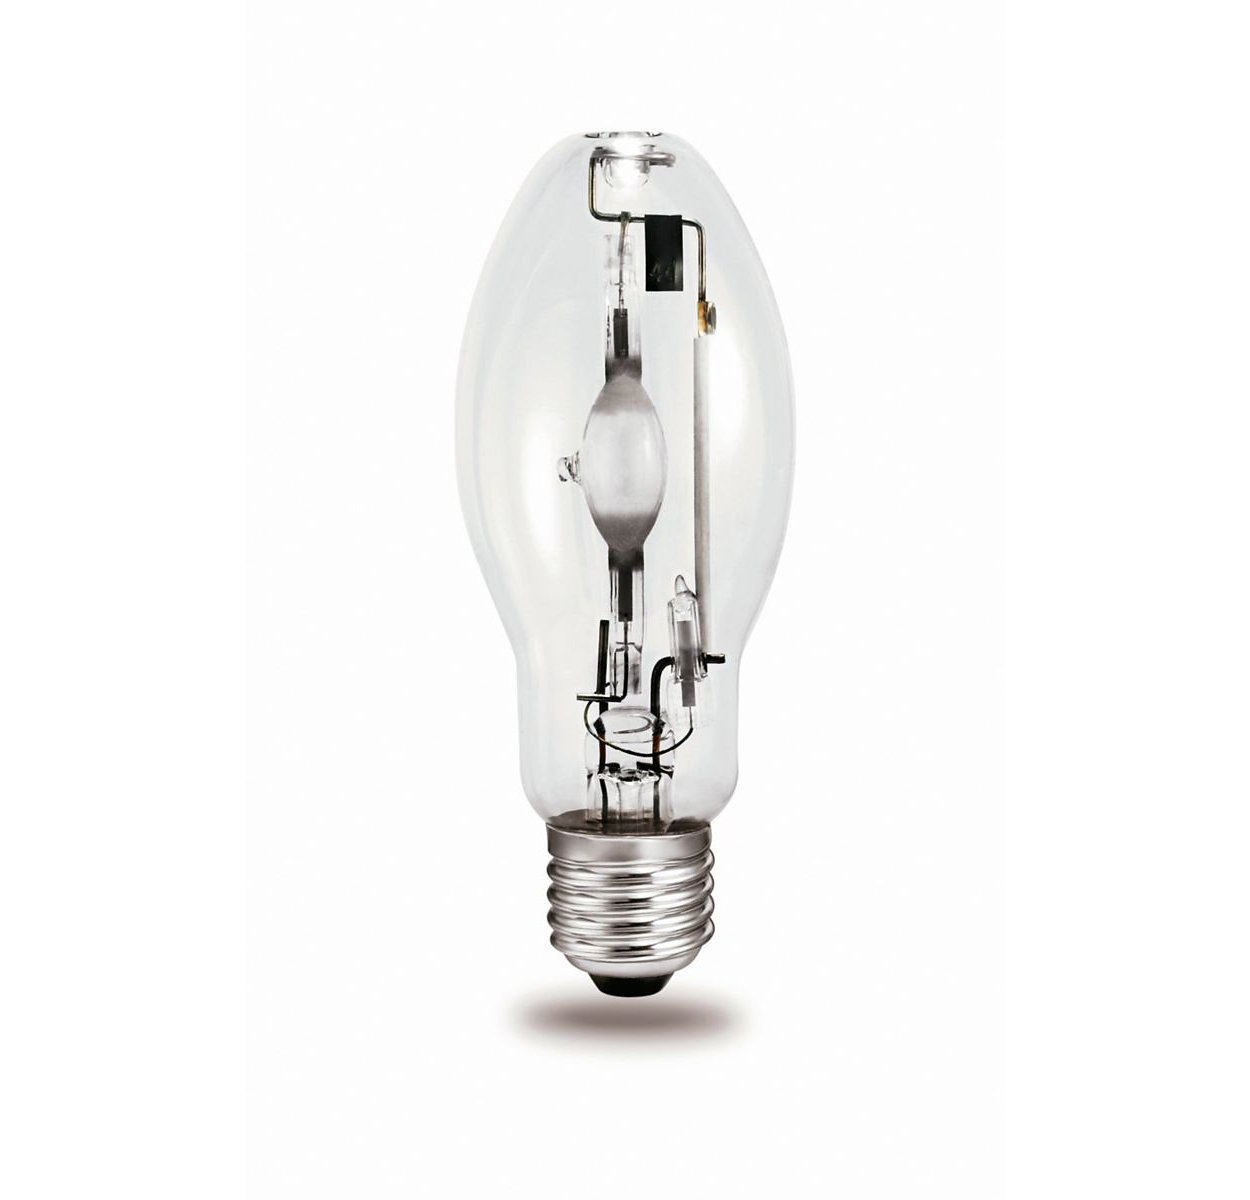 Philips MP750 BU PS 750 watt Metal Halide Light Bulb Two 2 